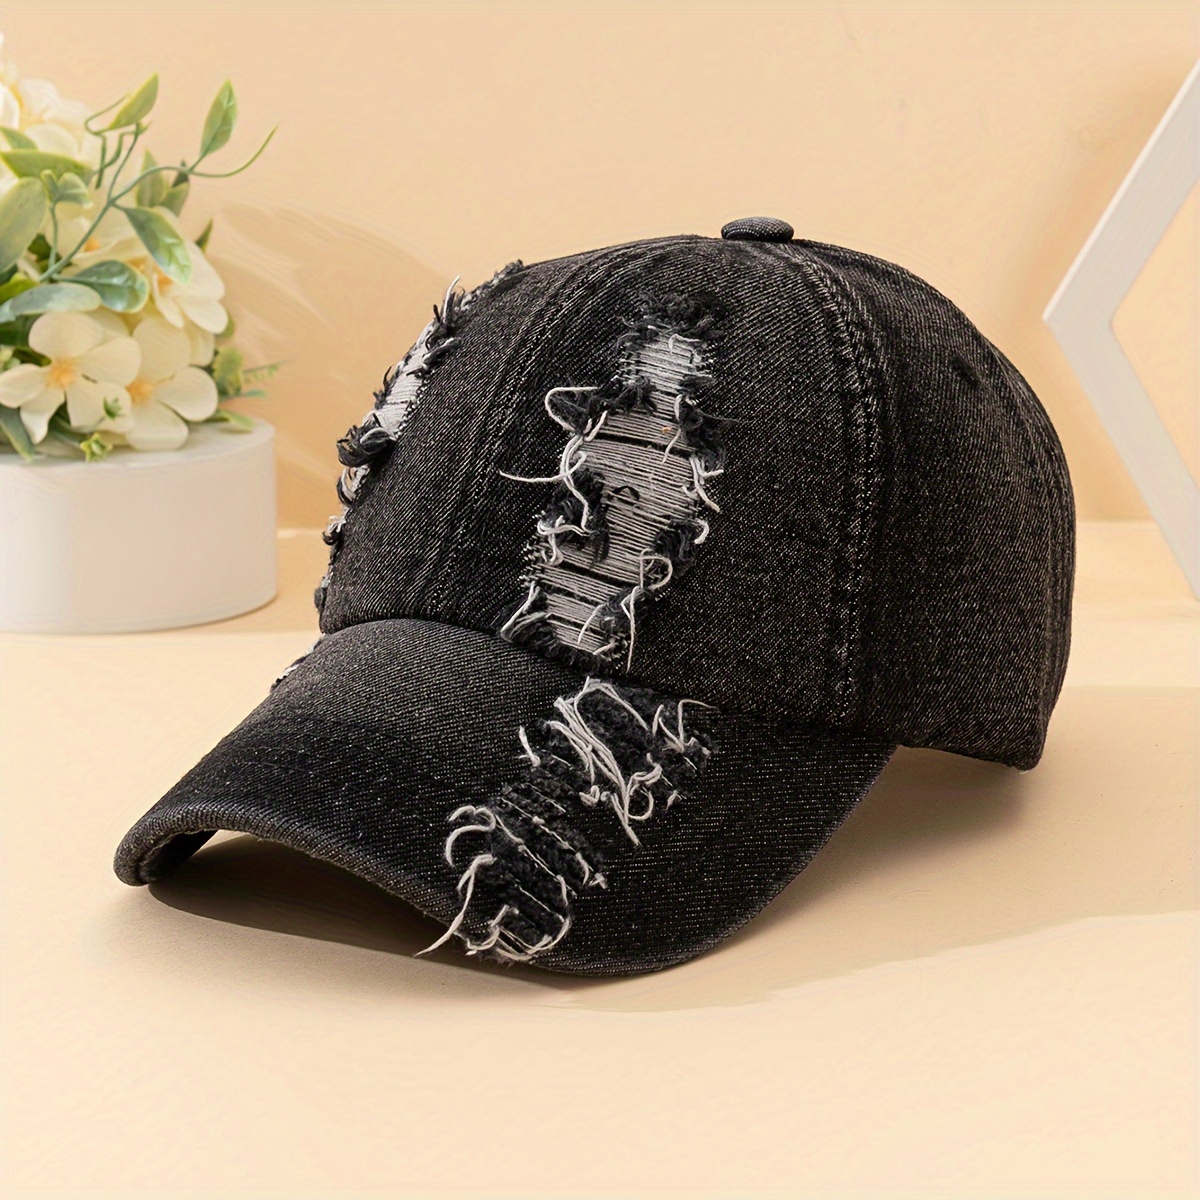 Retro Letter Distressed Denim Baseball Cap Adjustable Cotton Hat